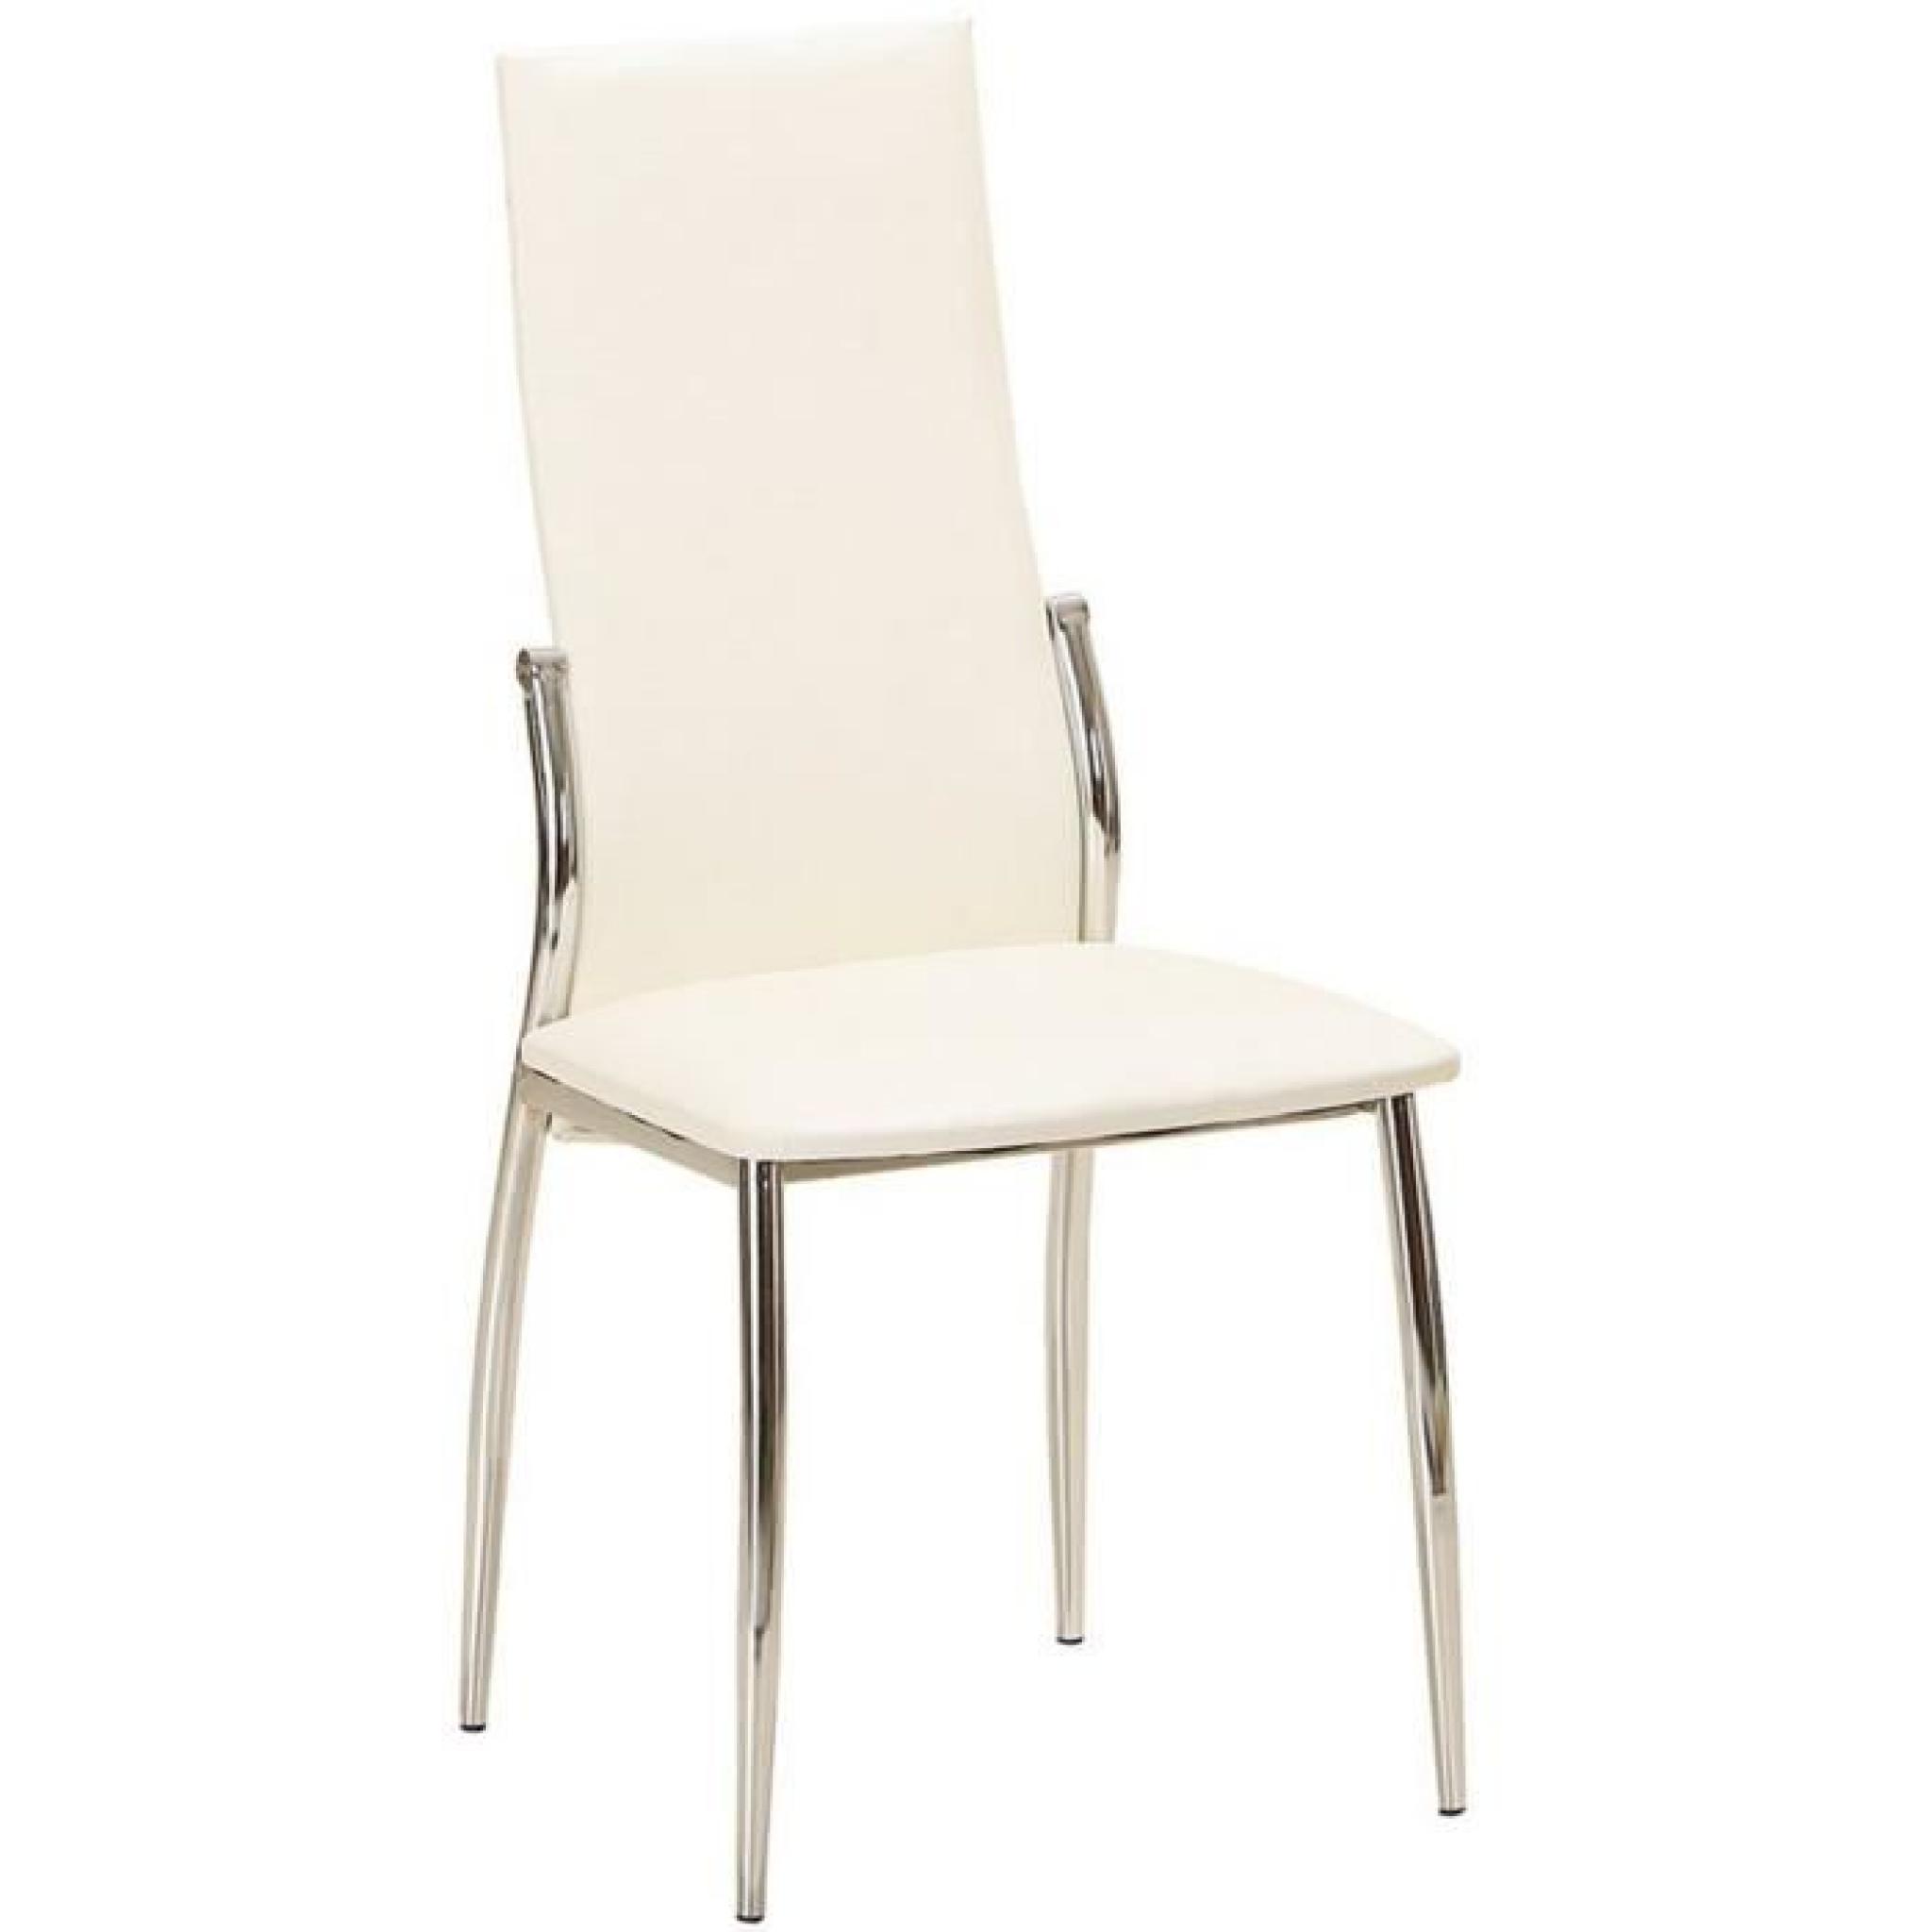 Chaise assise coloris Ecru, Dim : 46 x 45 x 98,5 cm